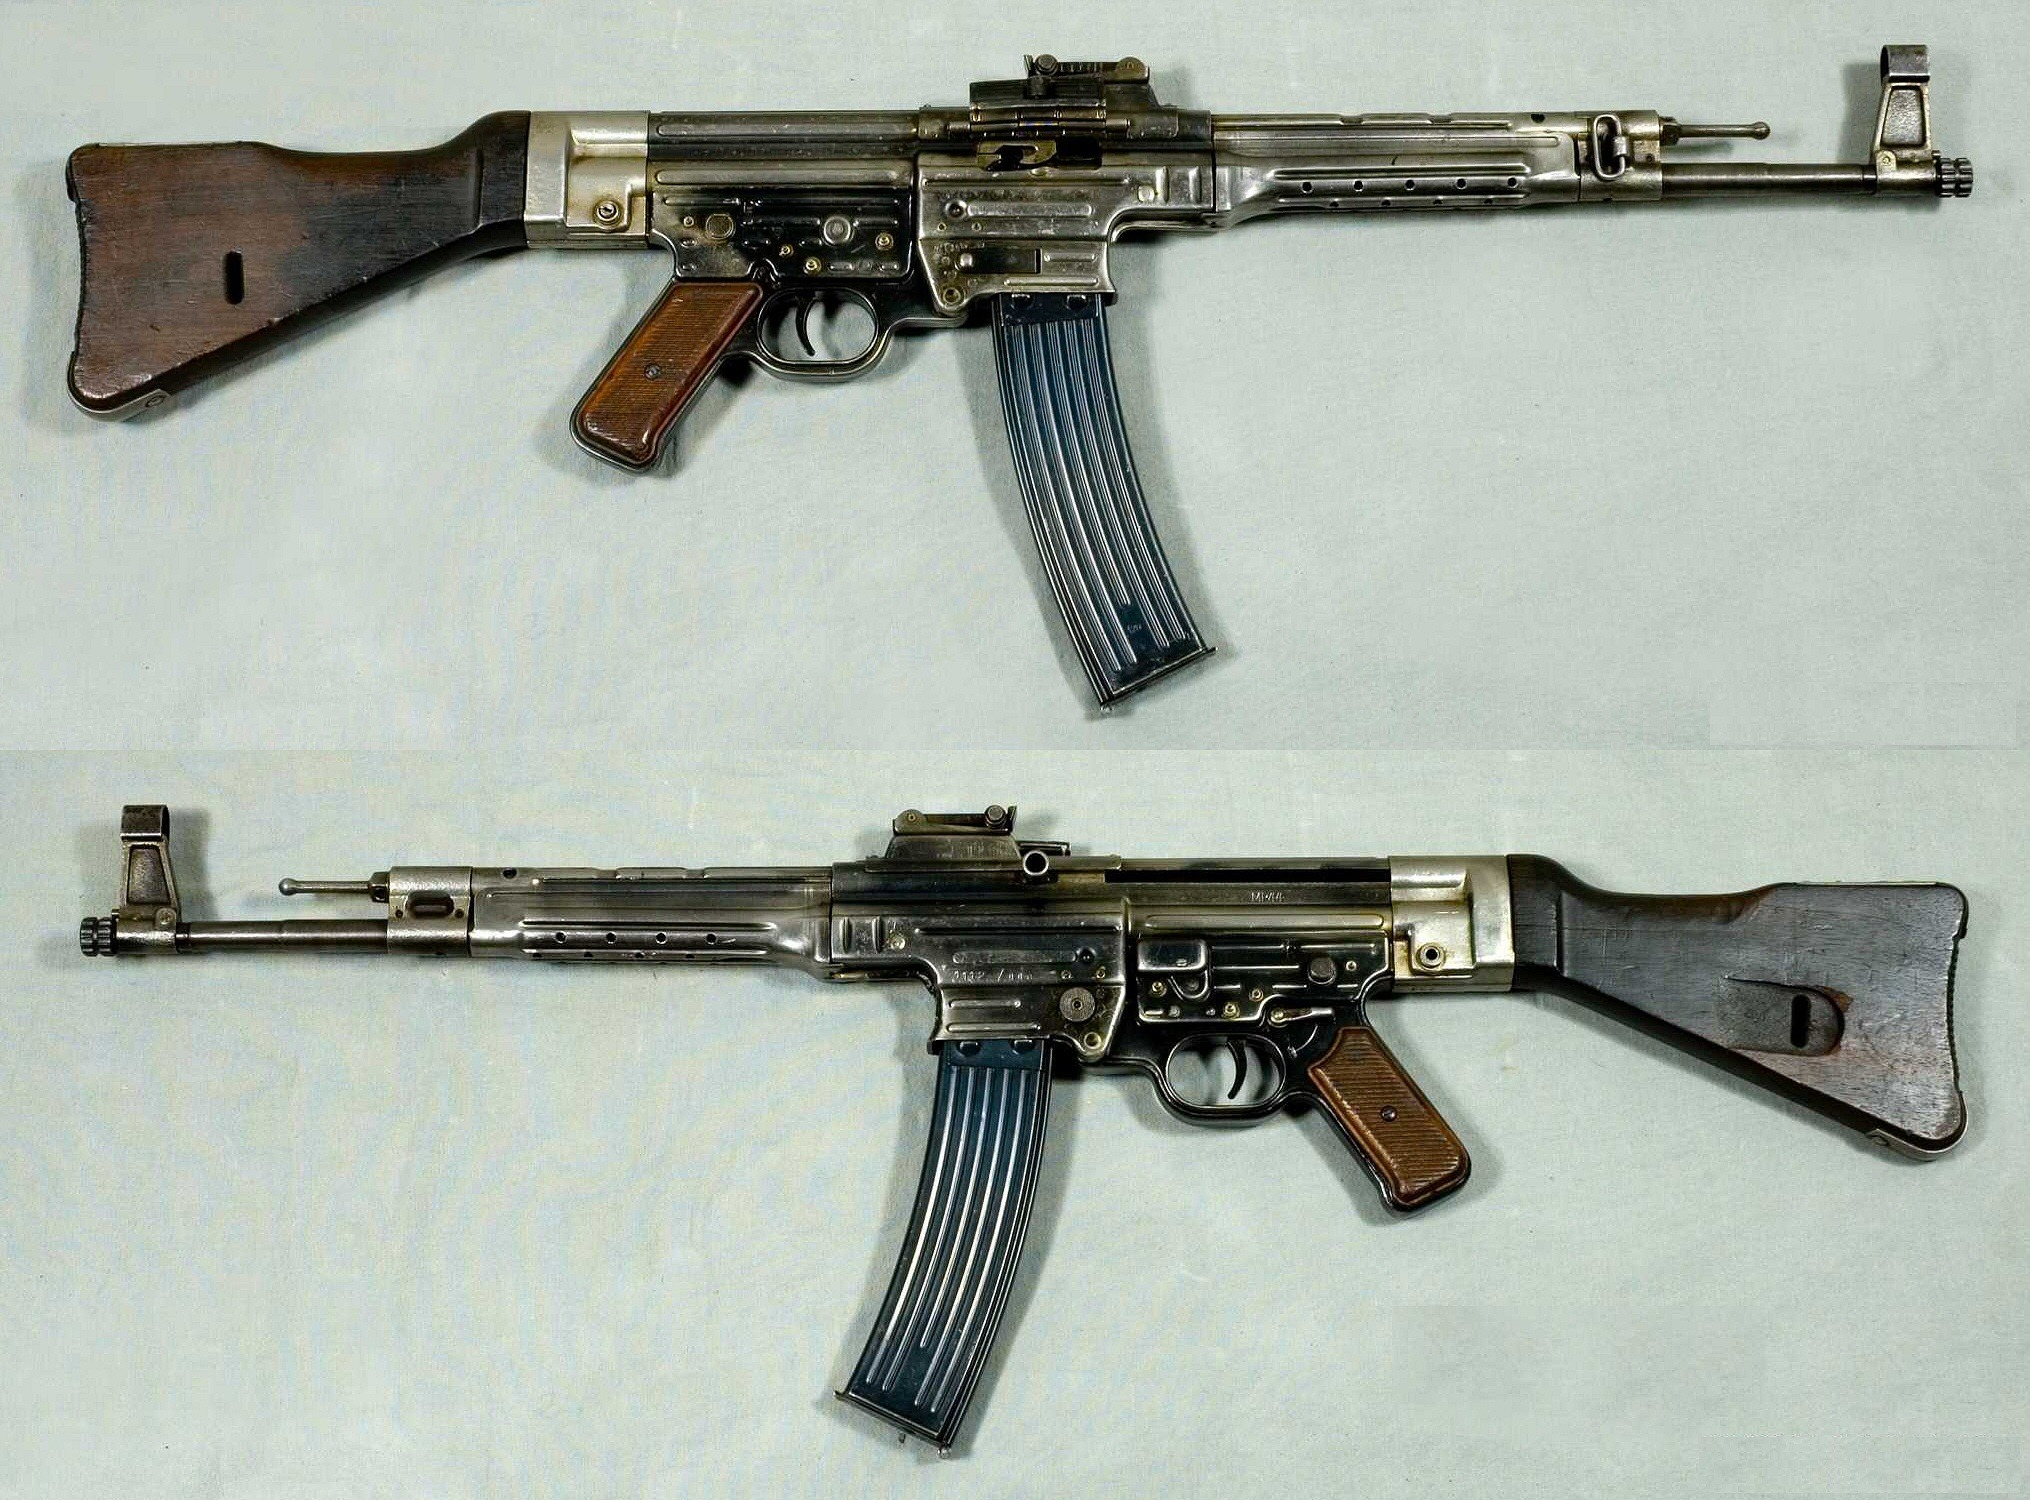 The STG 44/MP44 "assault rifle" or Sturmgewehr.